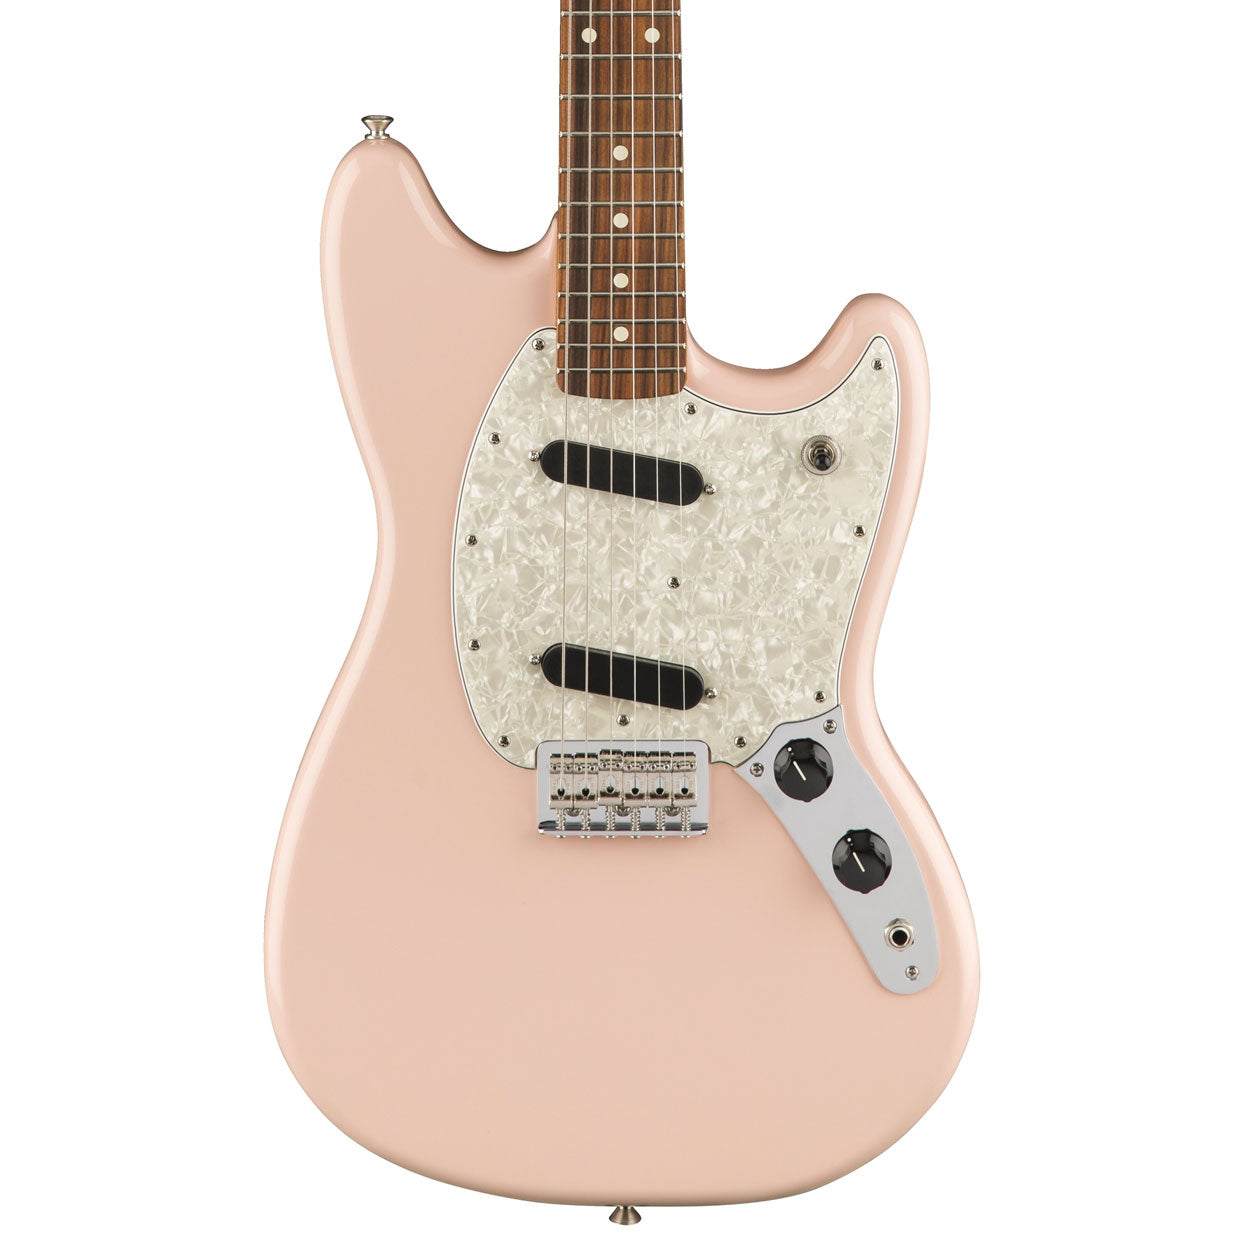 Гитара мустанг. Fender Mustang гитара. Электрогитара Фендер Мустанг. Fender Mustang Pink. Fender Squier розовый.